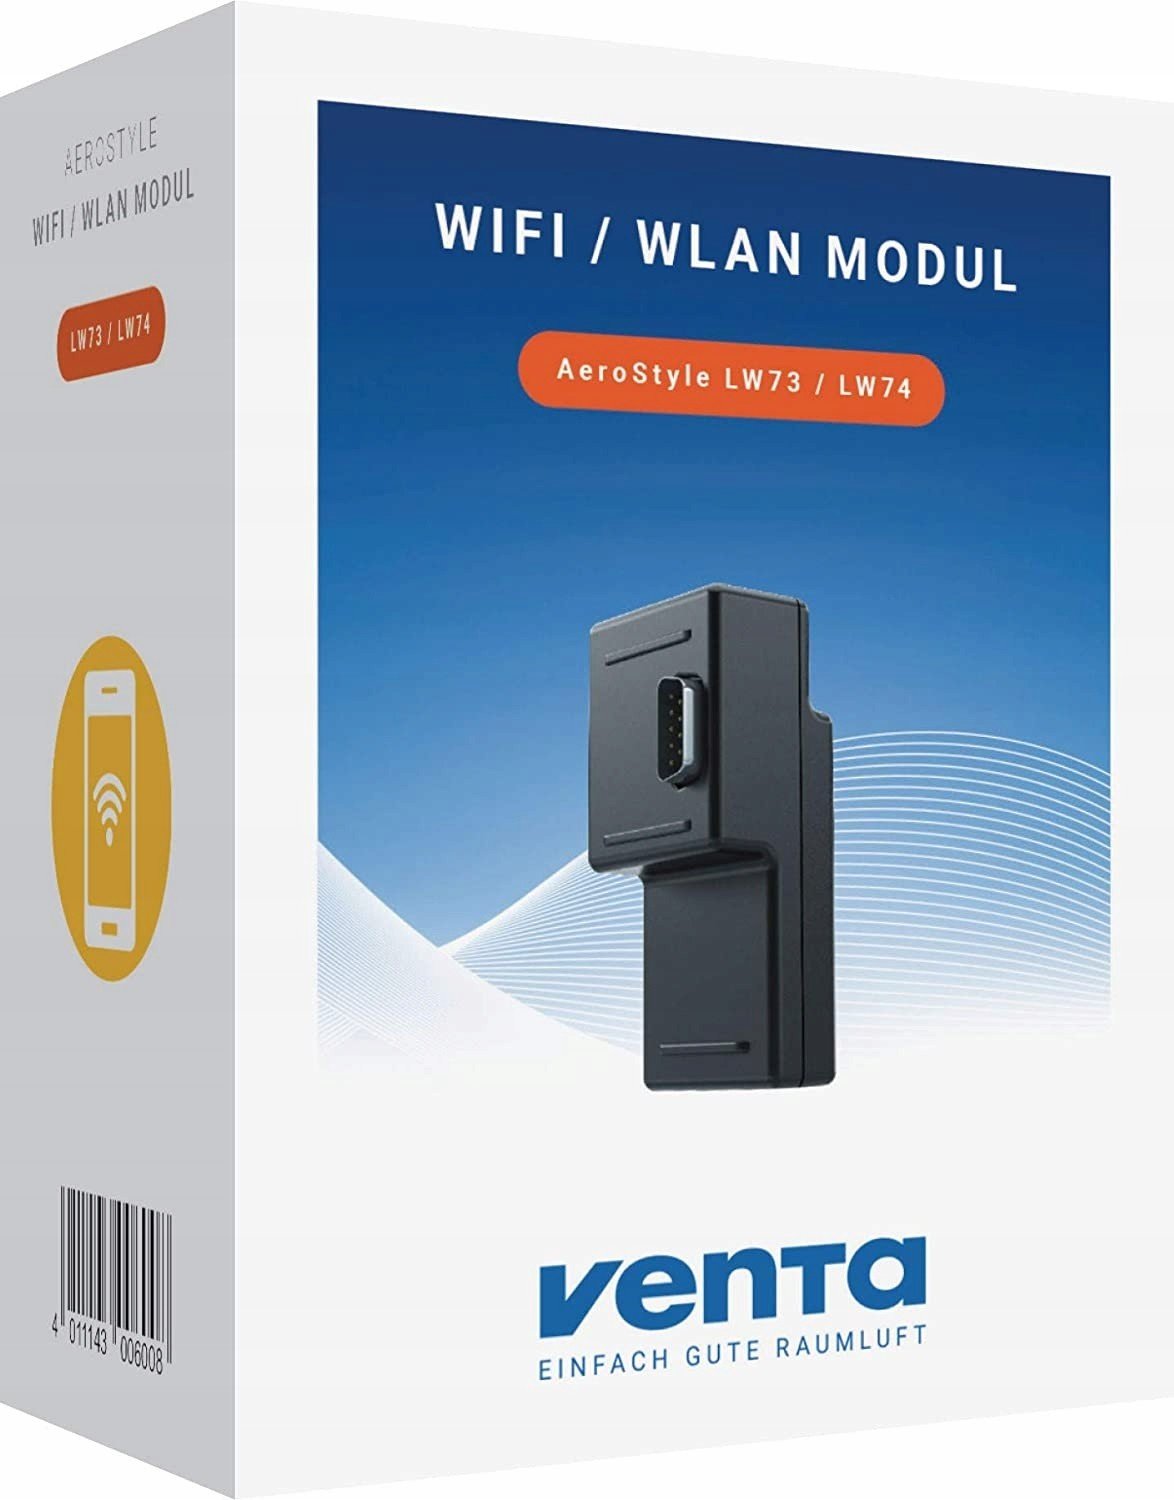 Venta WLAN/WiFi modul LW73 Aerostyle